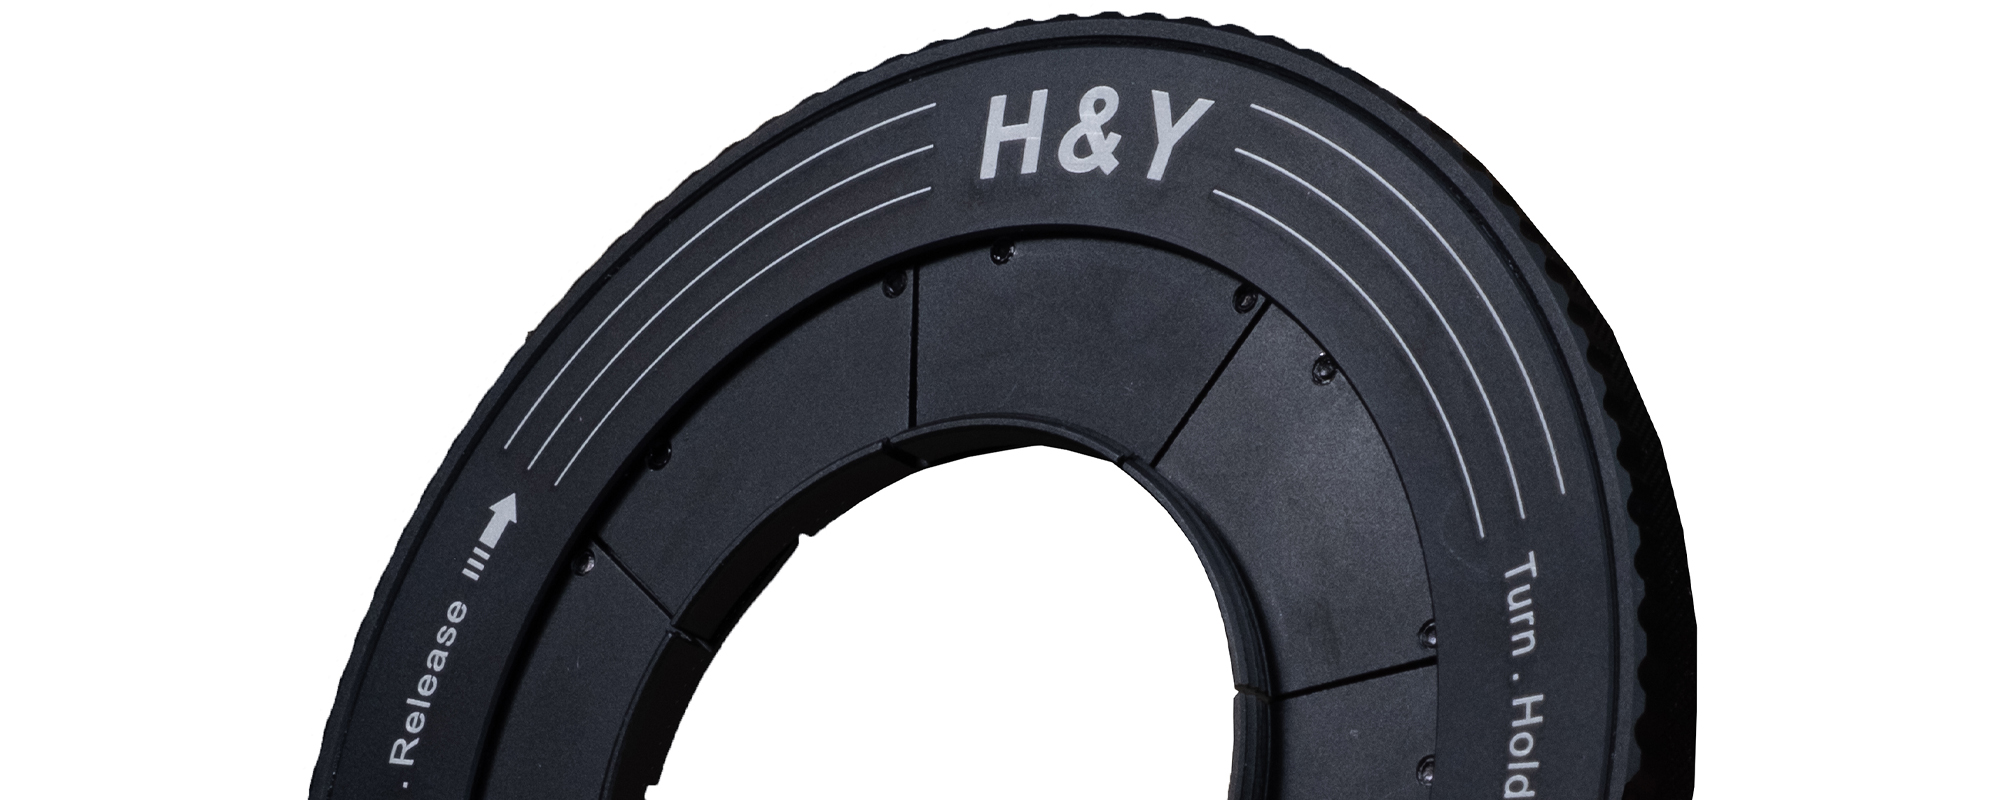 Adapter filtrowy regulowany H&Y Revoring 46-62 mm do filtrów 67 mm